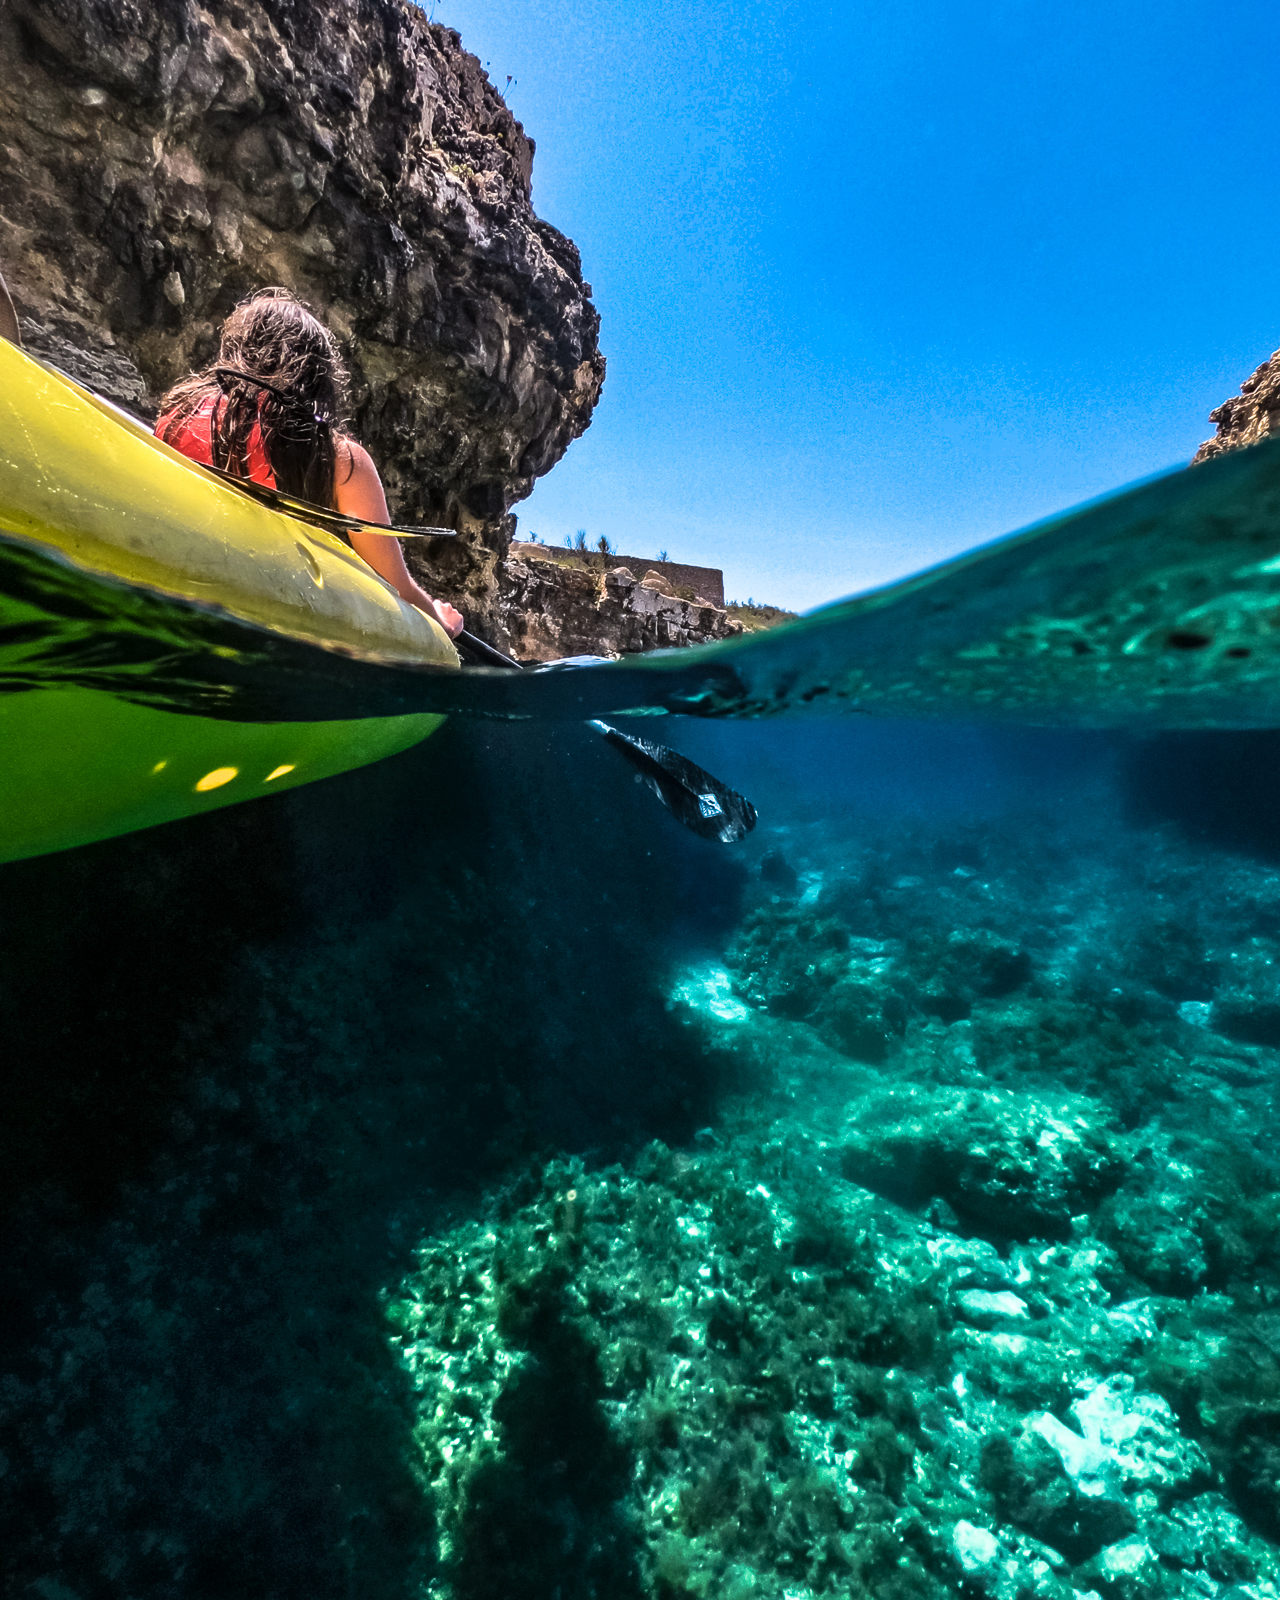 Underwater overwater kayak shot